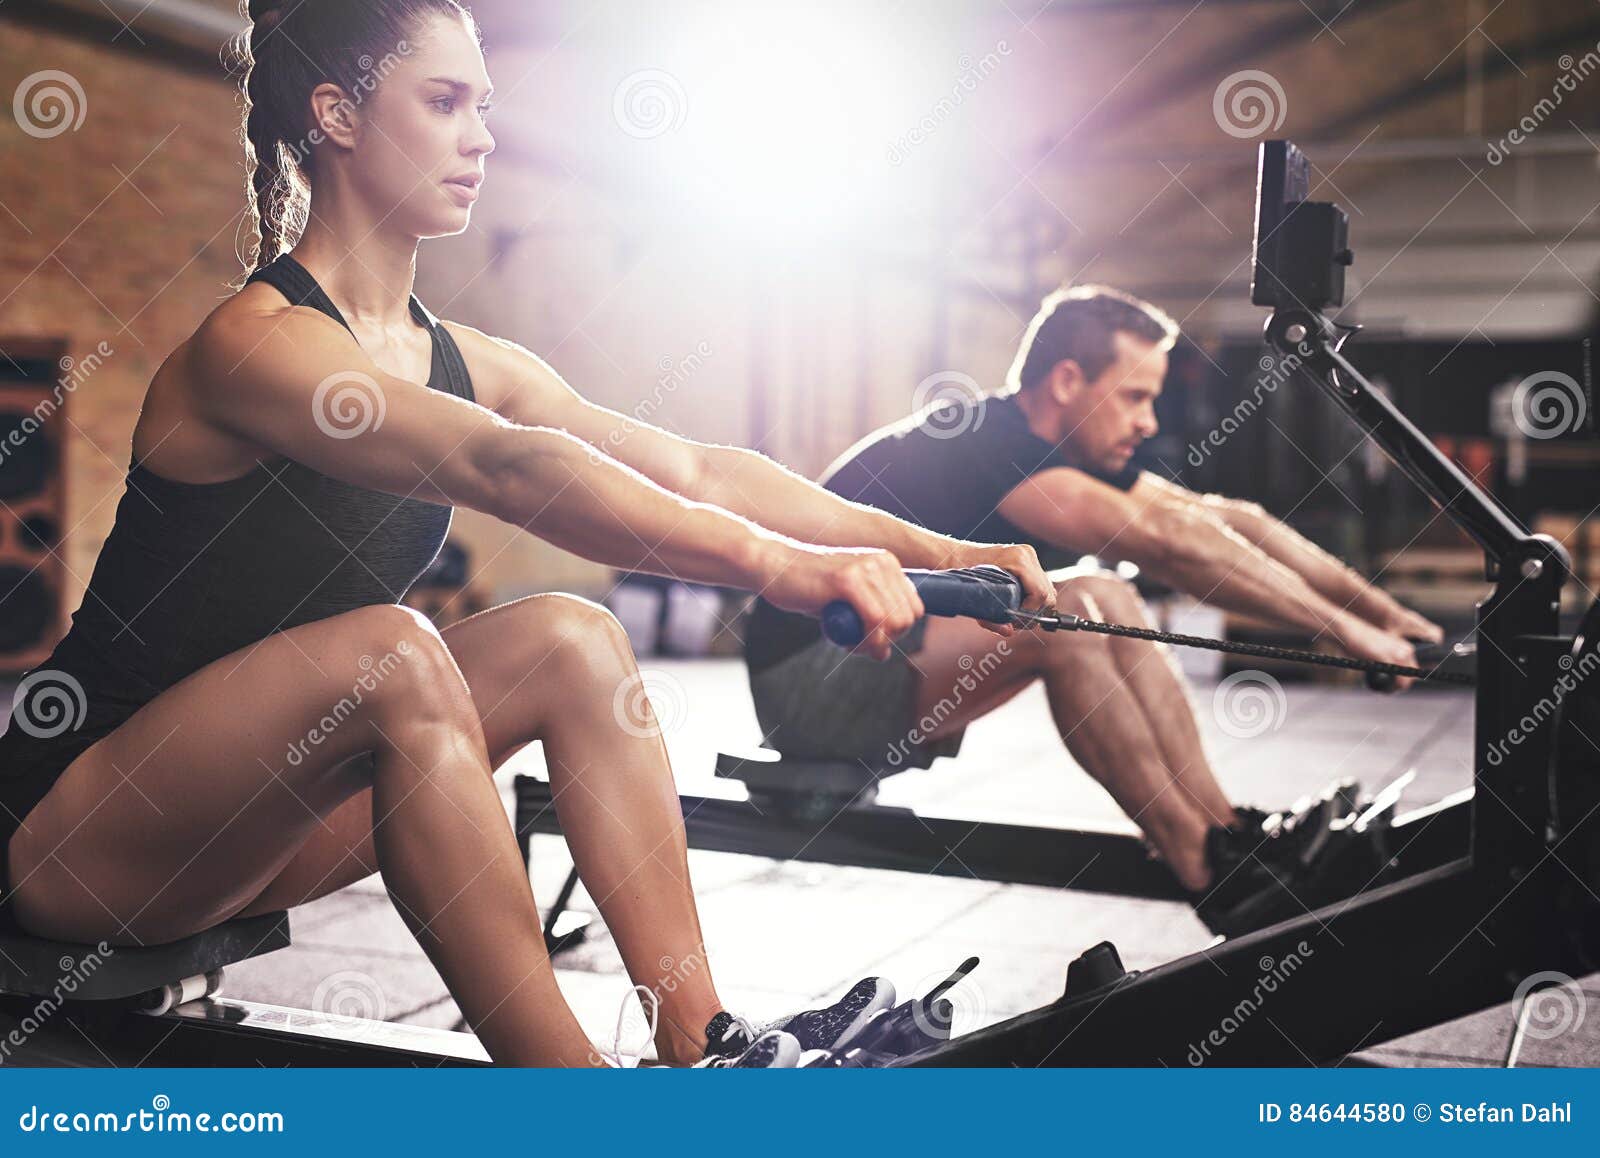 people having hard workout on rowing machines